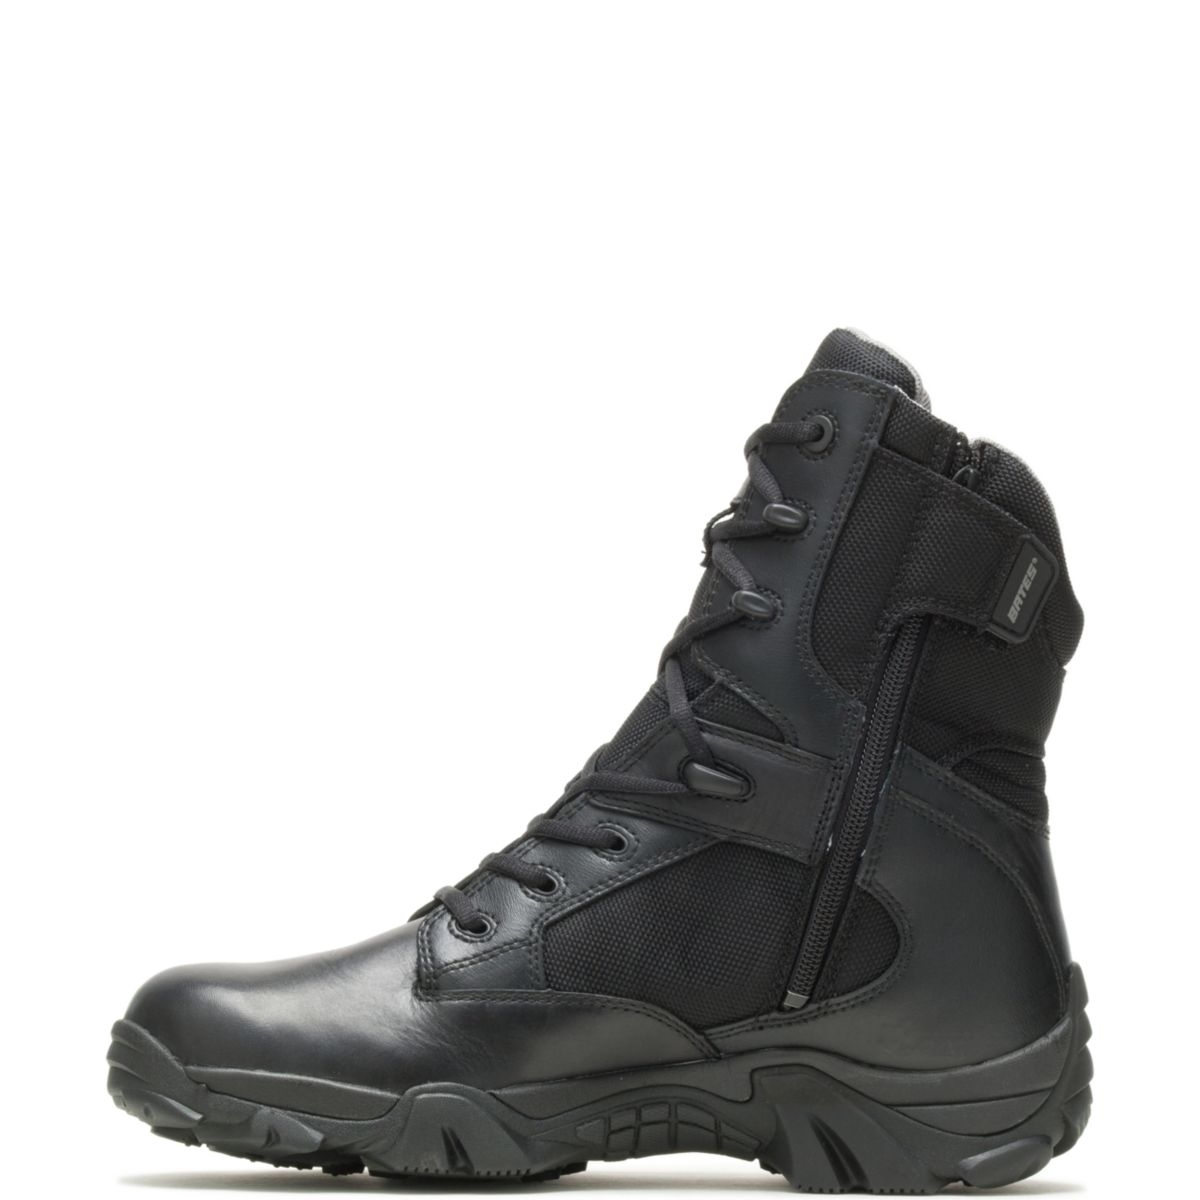 Bates Men's GX-8 Side-Zip GORE-TEXÂ® Waterproof Boot Black - E02268 BLACK - BLACK, 9.5-EW